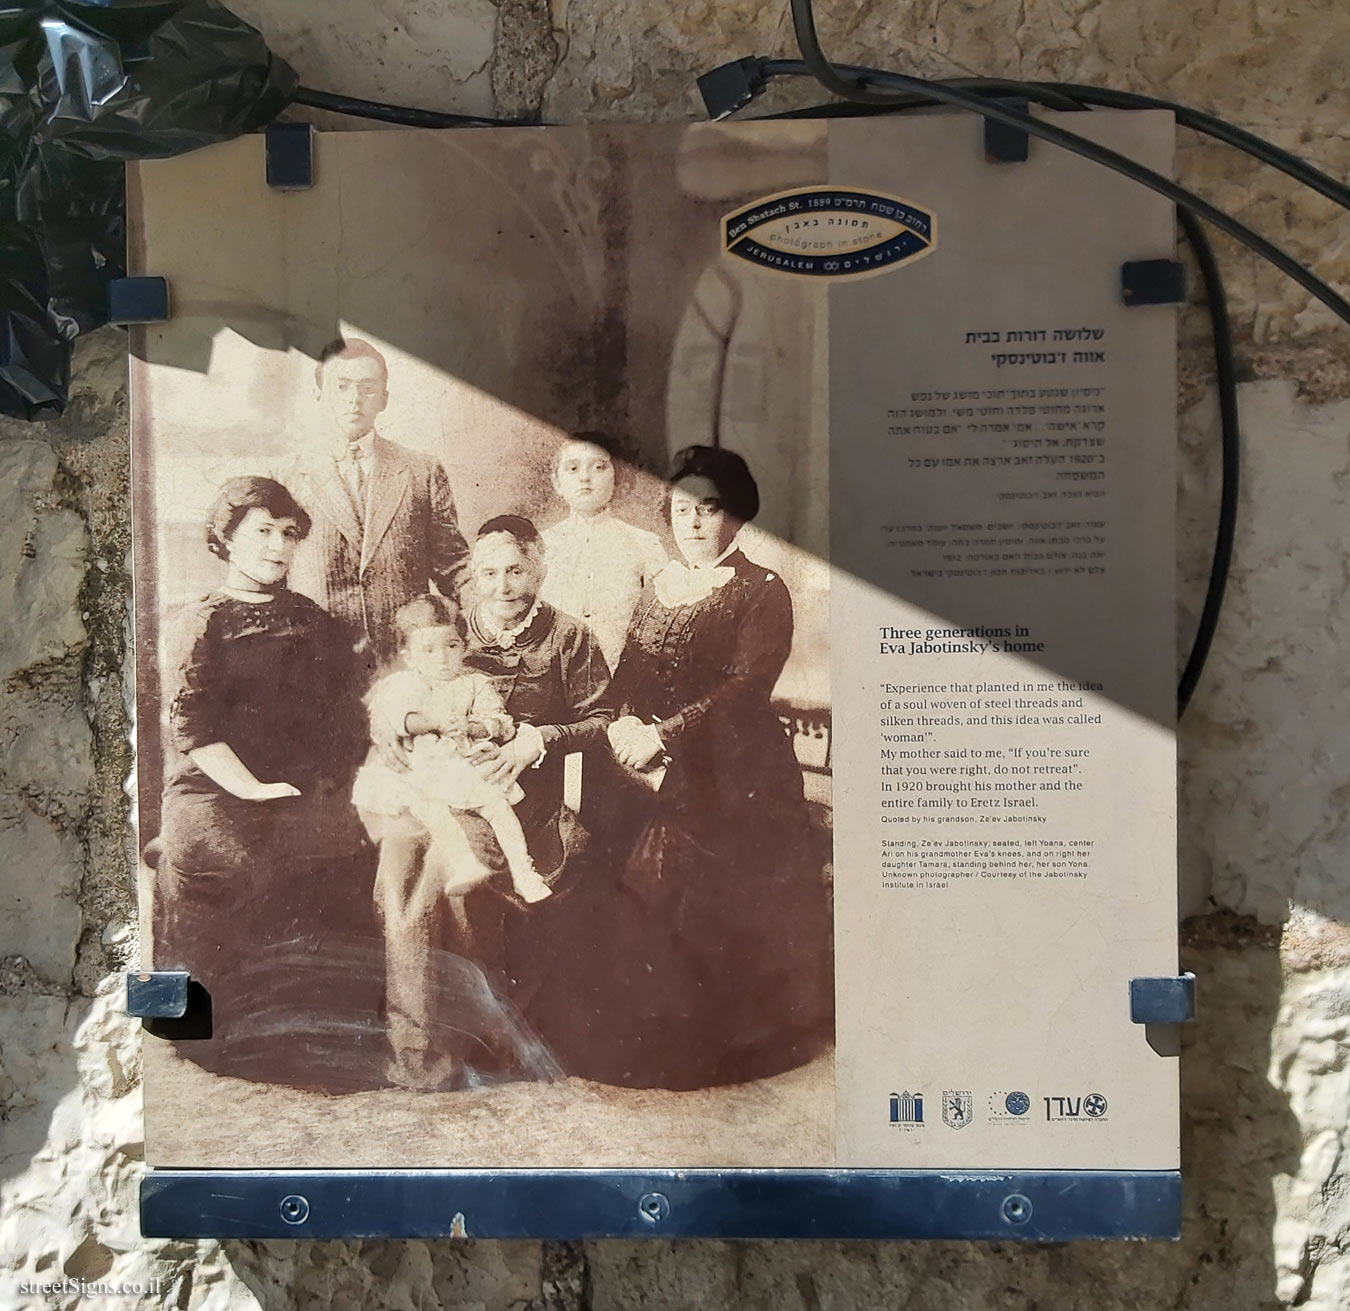 Jerusalem - Photograph in stone - Ben Shatach St - Three generations in Eva Jabotinsky’s home